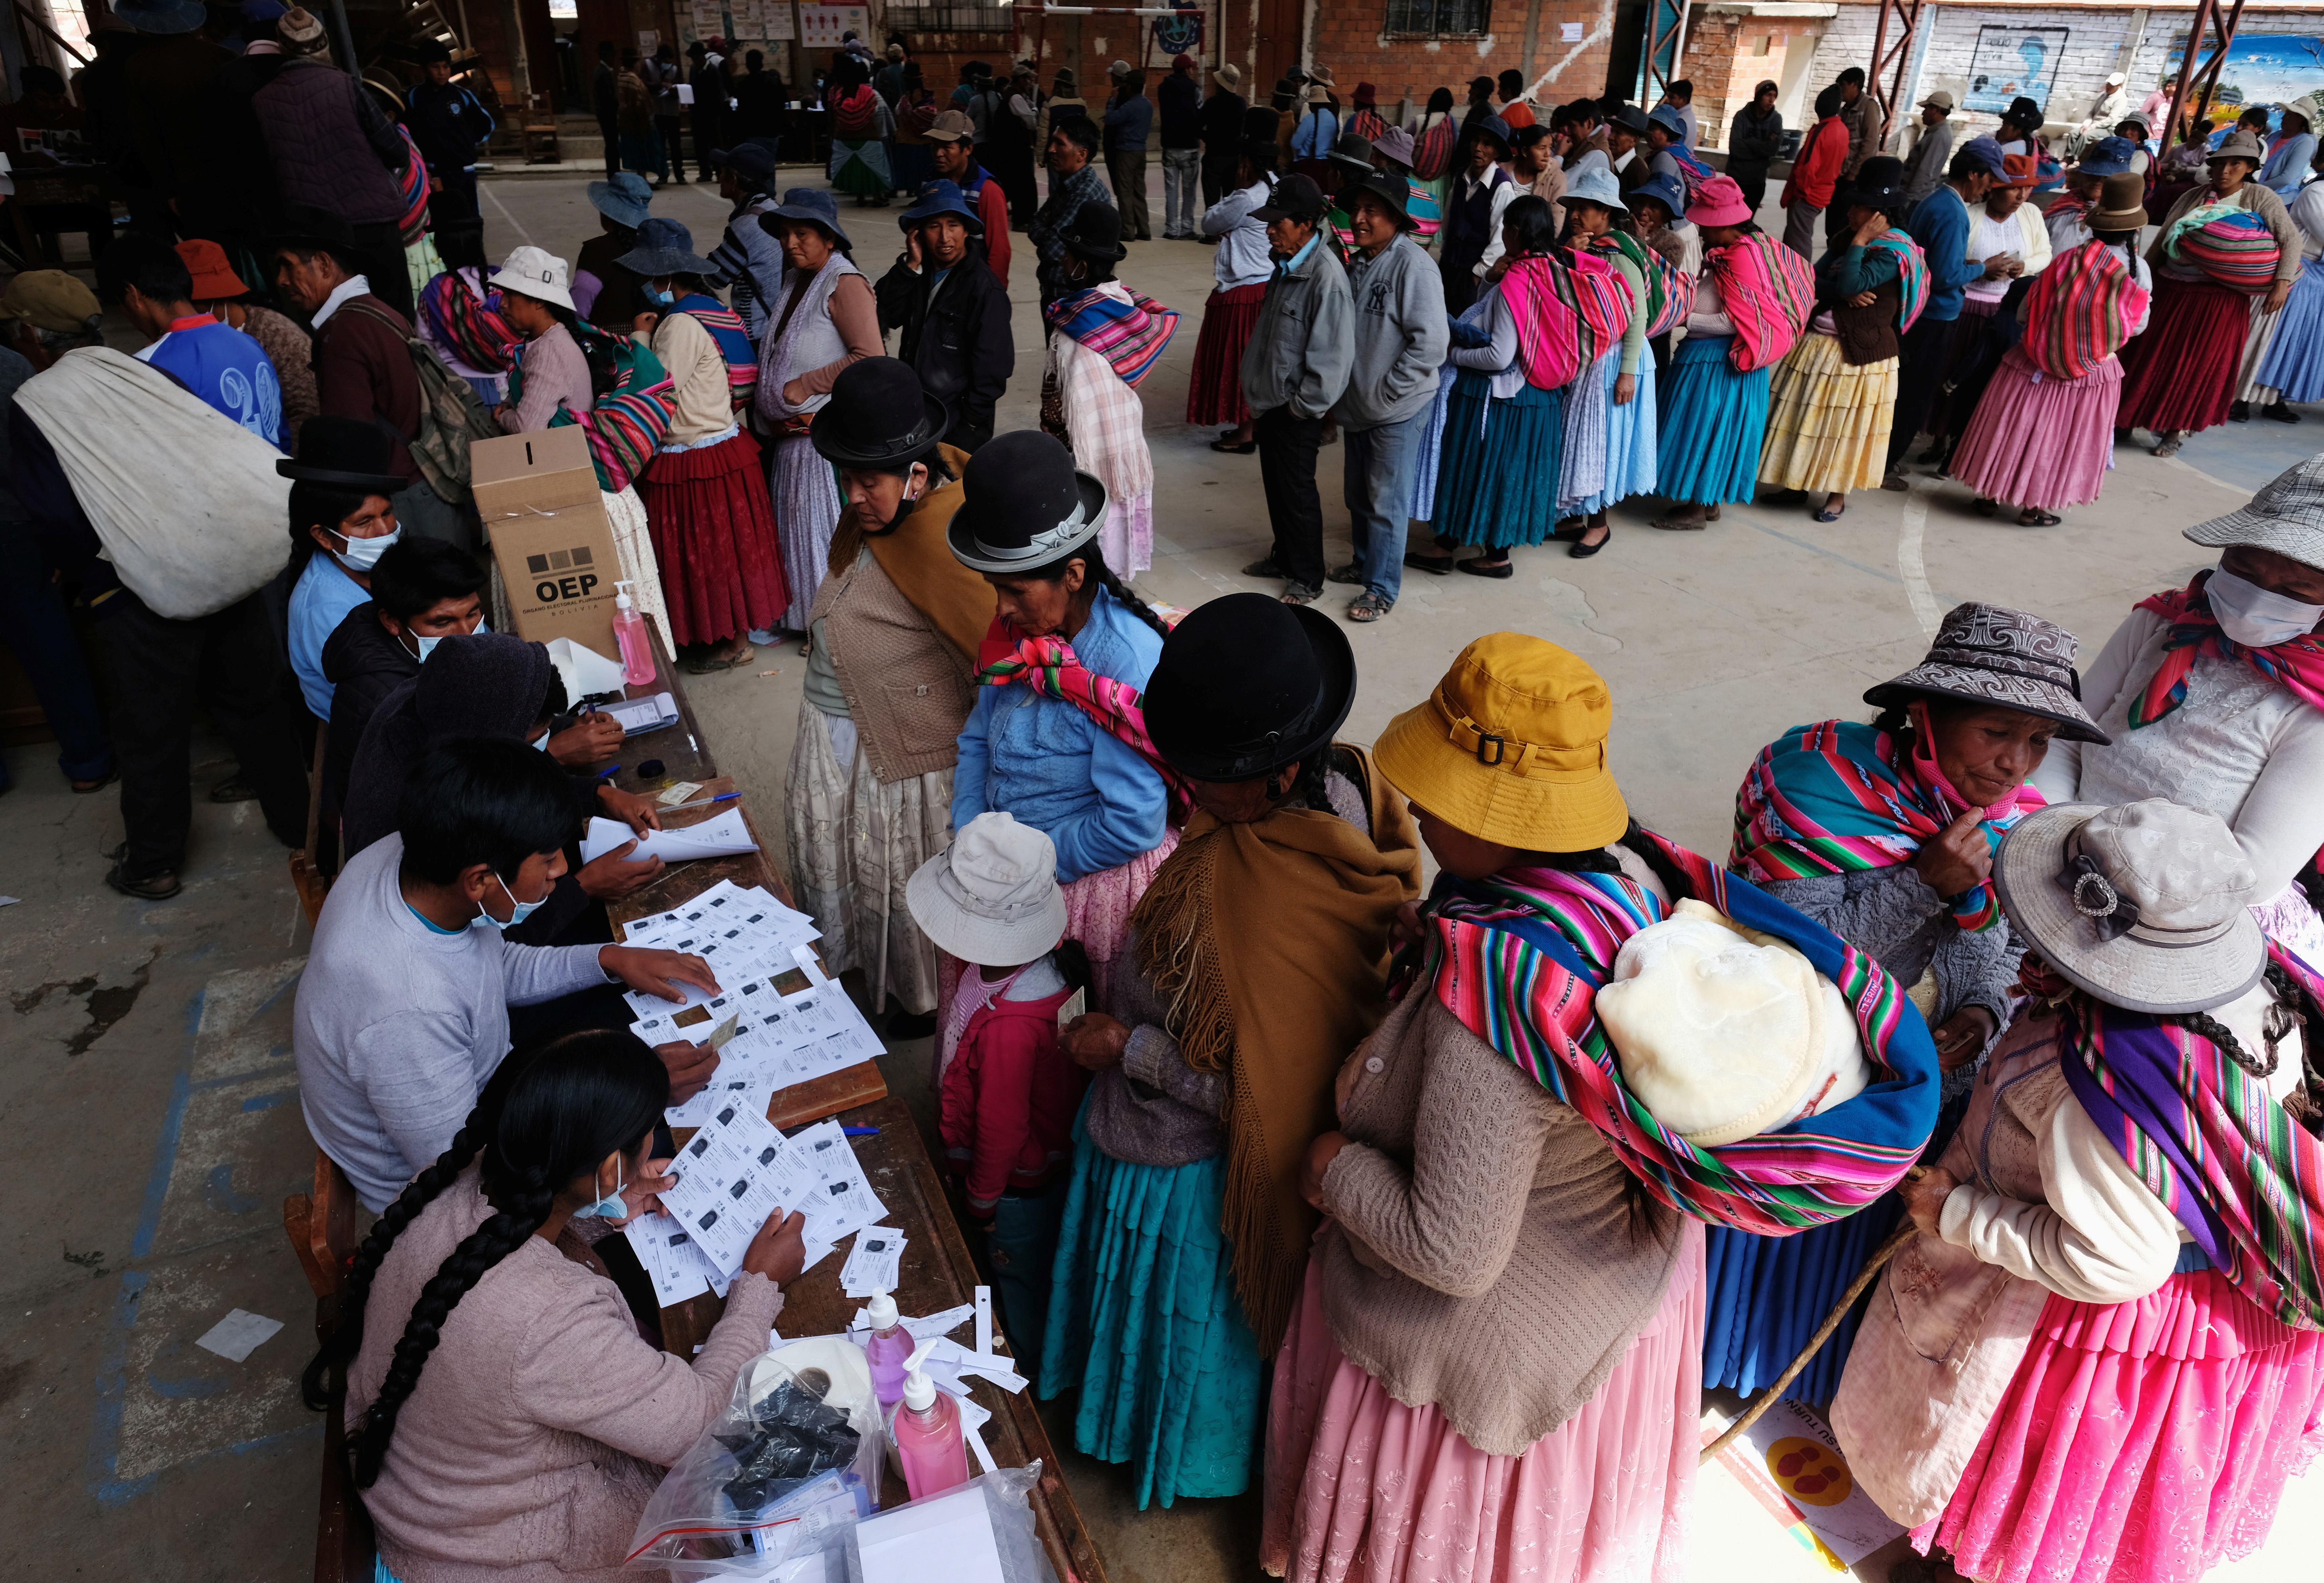 Fila para votar en Cohoni, Bolivia (REUTERS/Wara Vargas Lara)